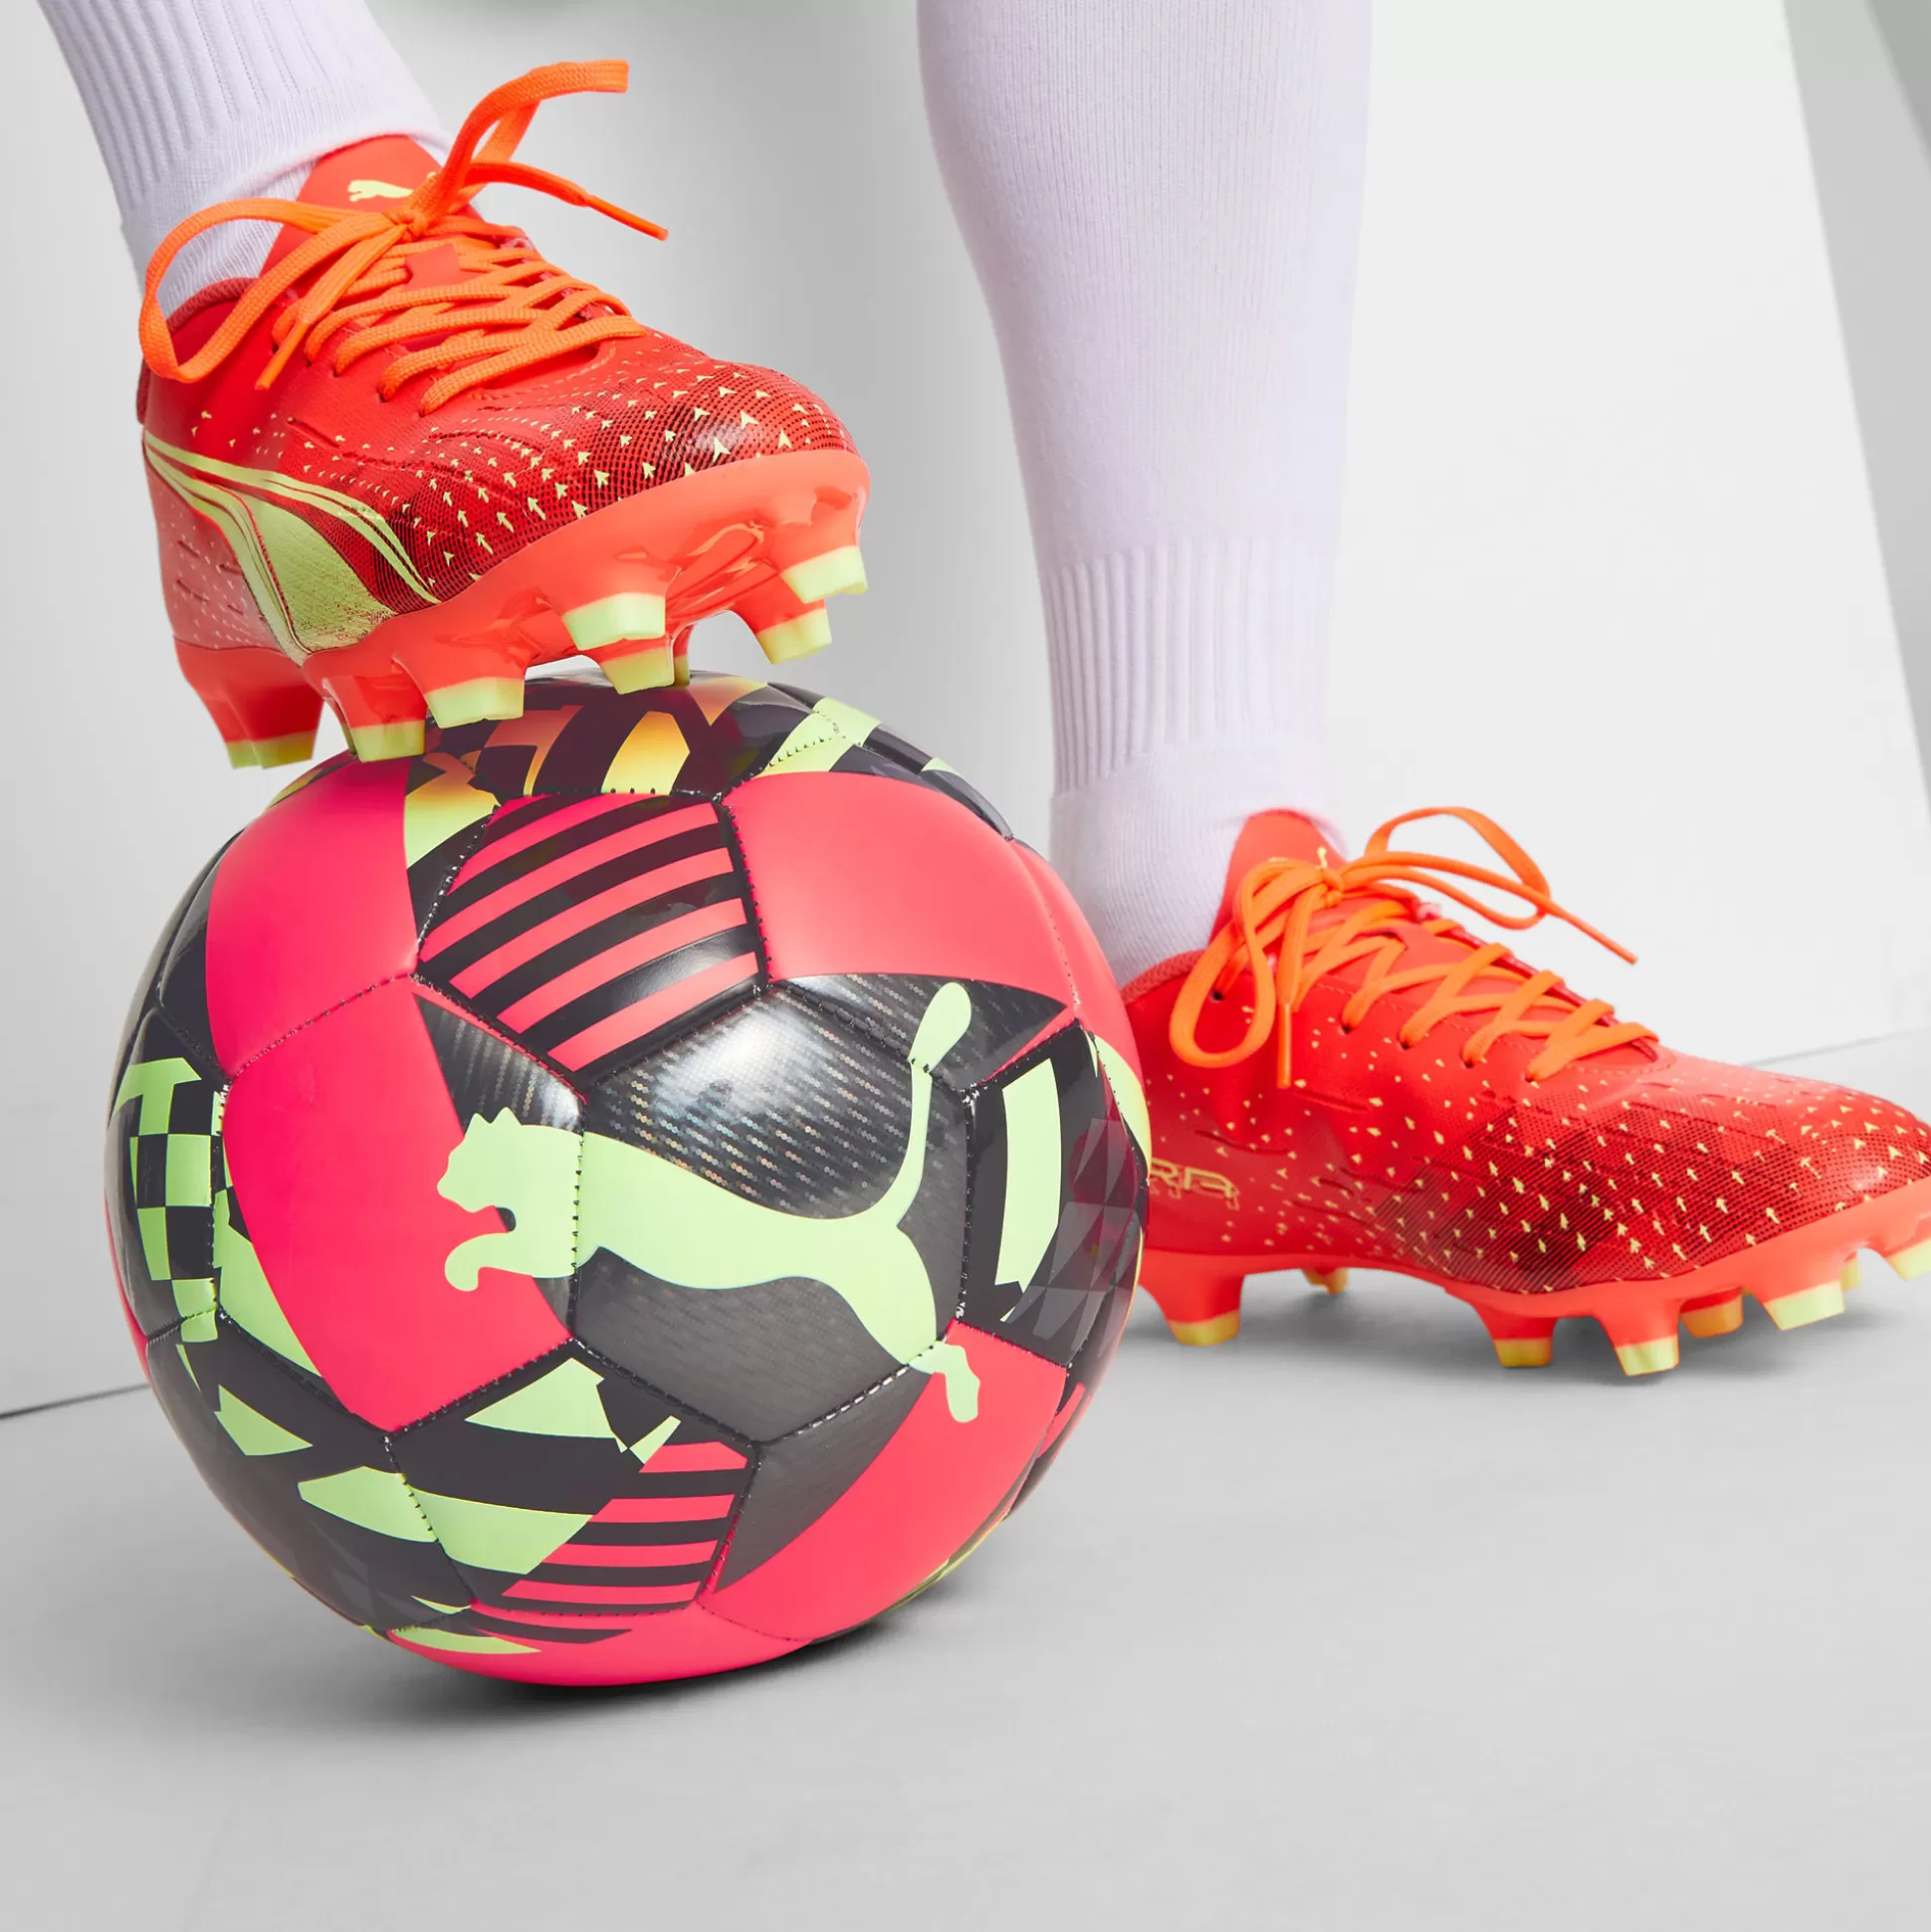 Soccer Balls | Puma FOOSBALL Park Soccer Ball Fiery Coral-Fizzy Light